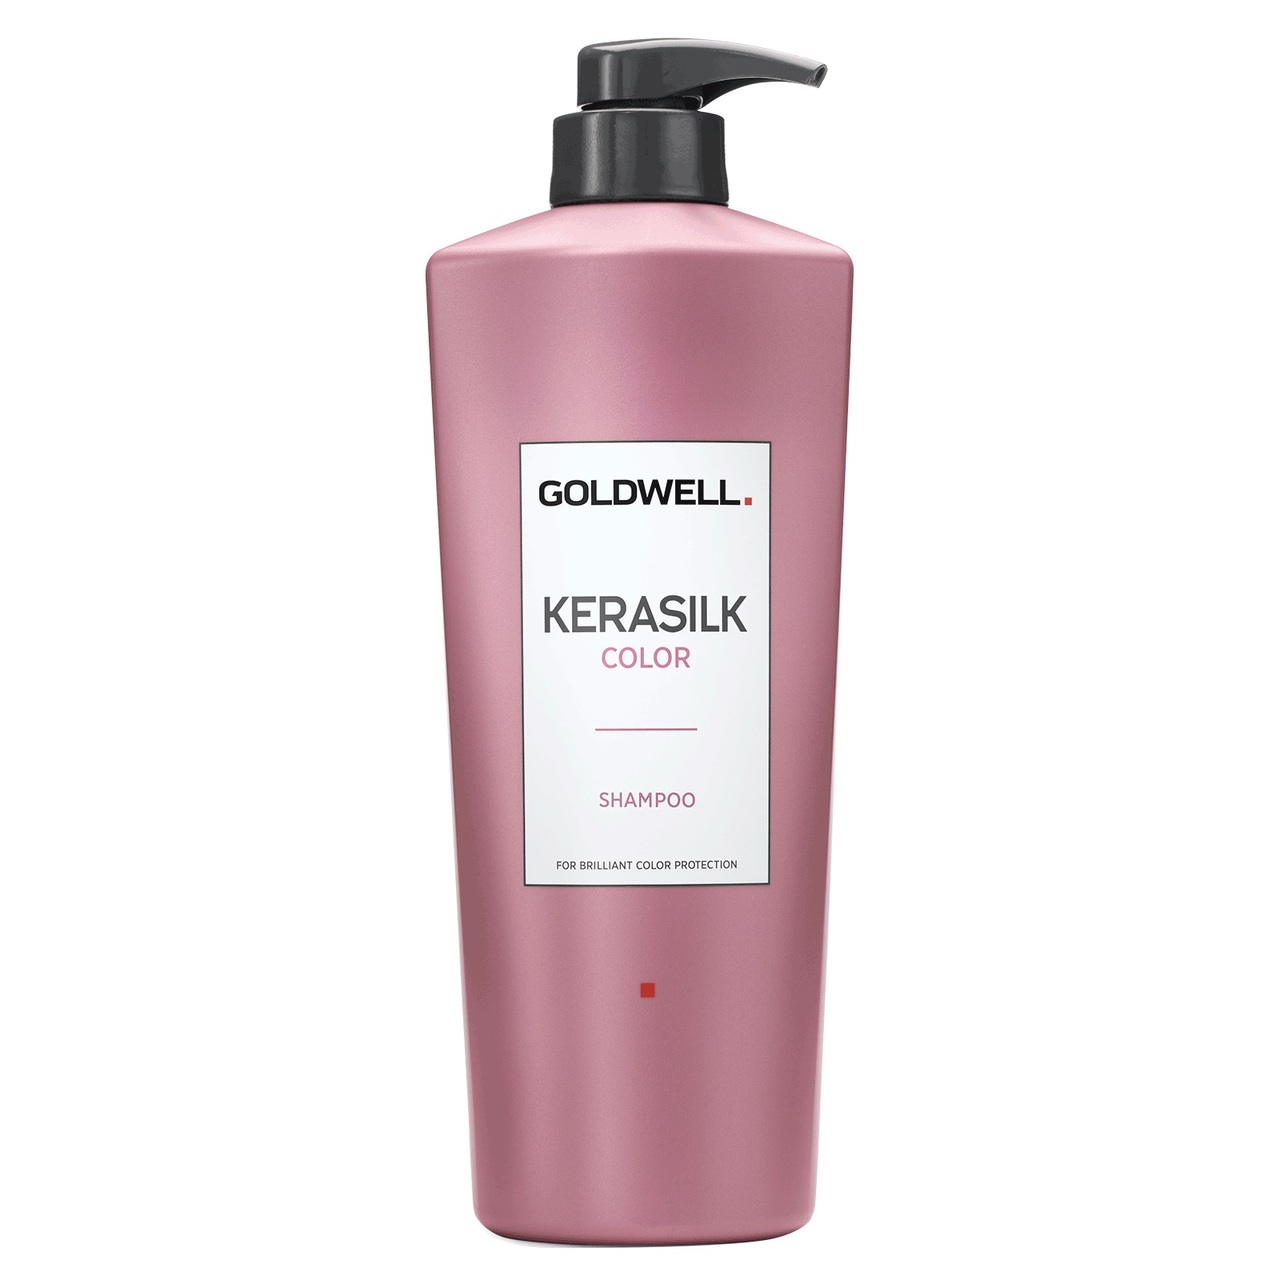 Goldwell Kerasilk Color Shampoo Liter - $74.00